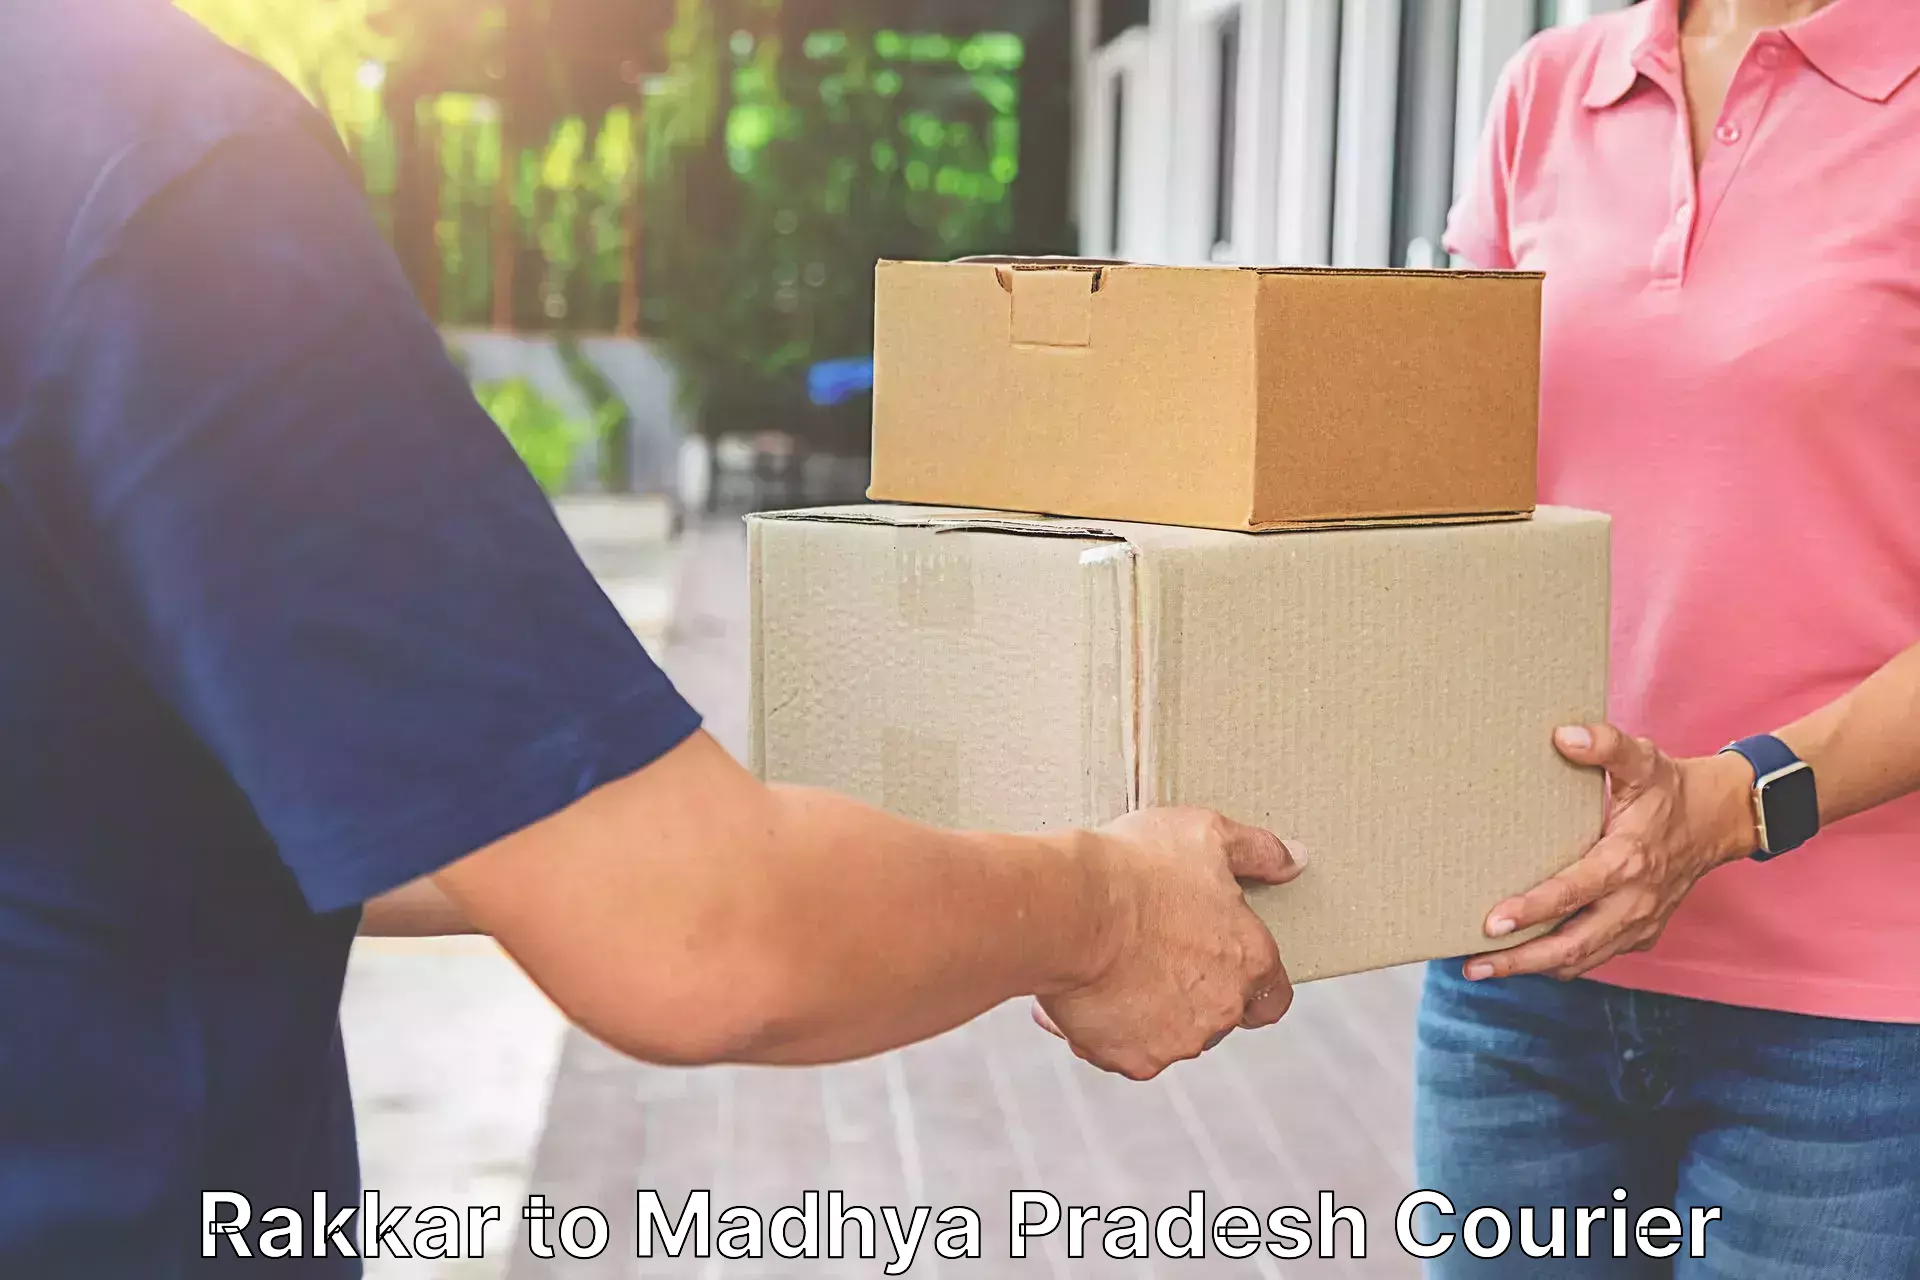 Affordable parcel service Rakkar to Maheshwar